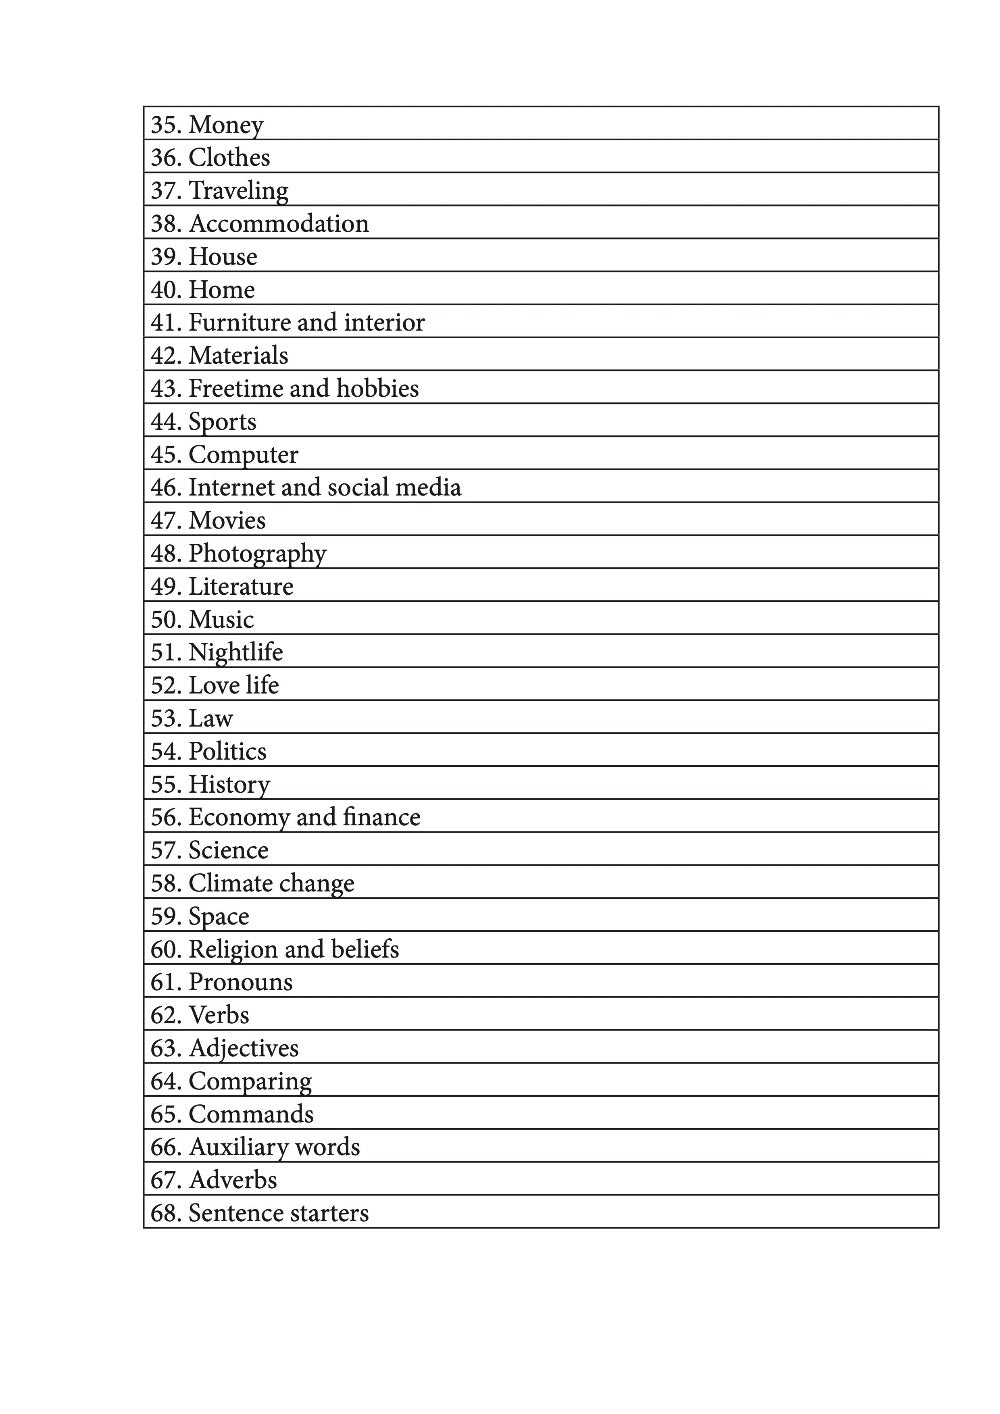 Hazaragi language learning notebook contents page 2